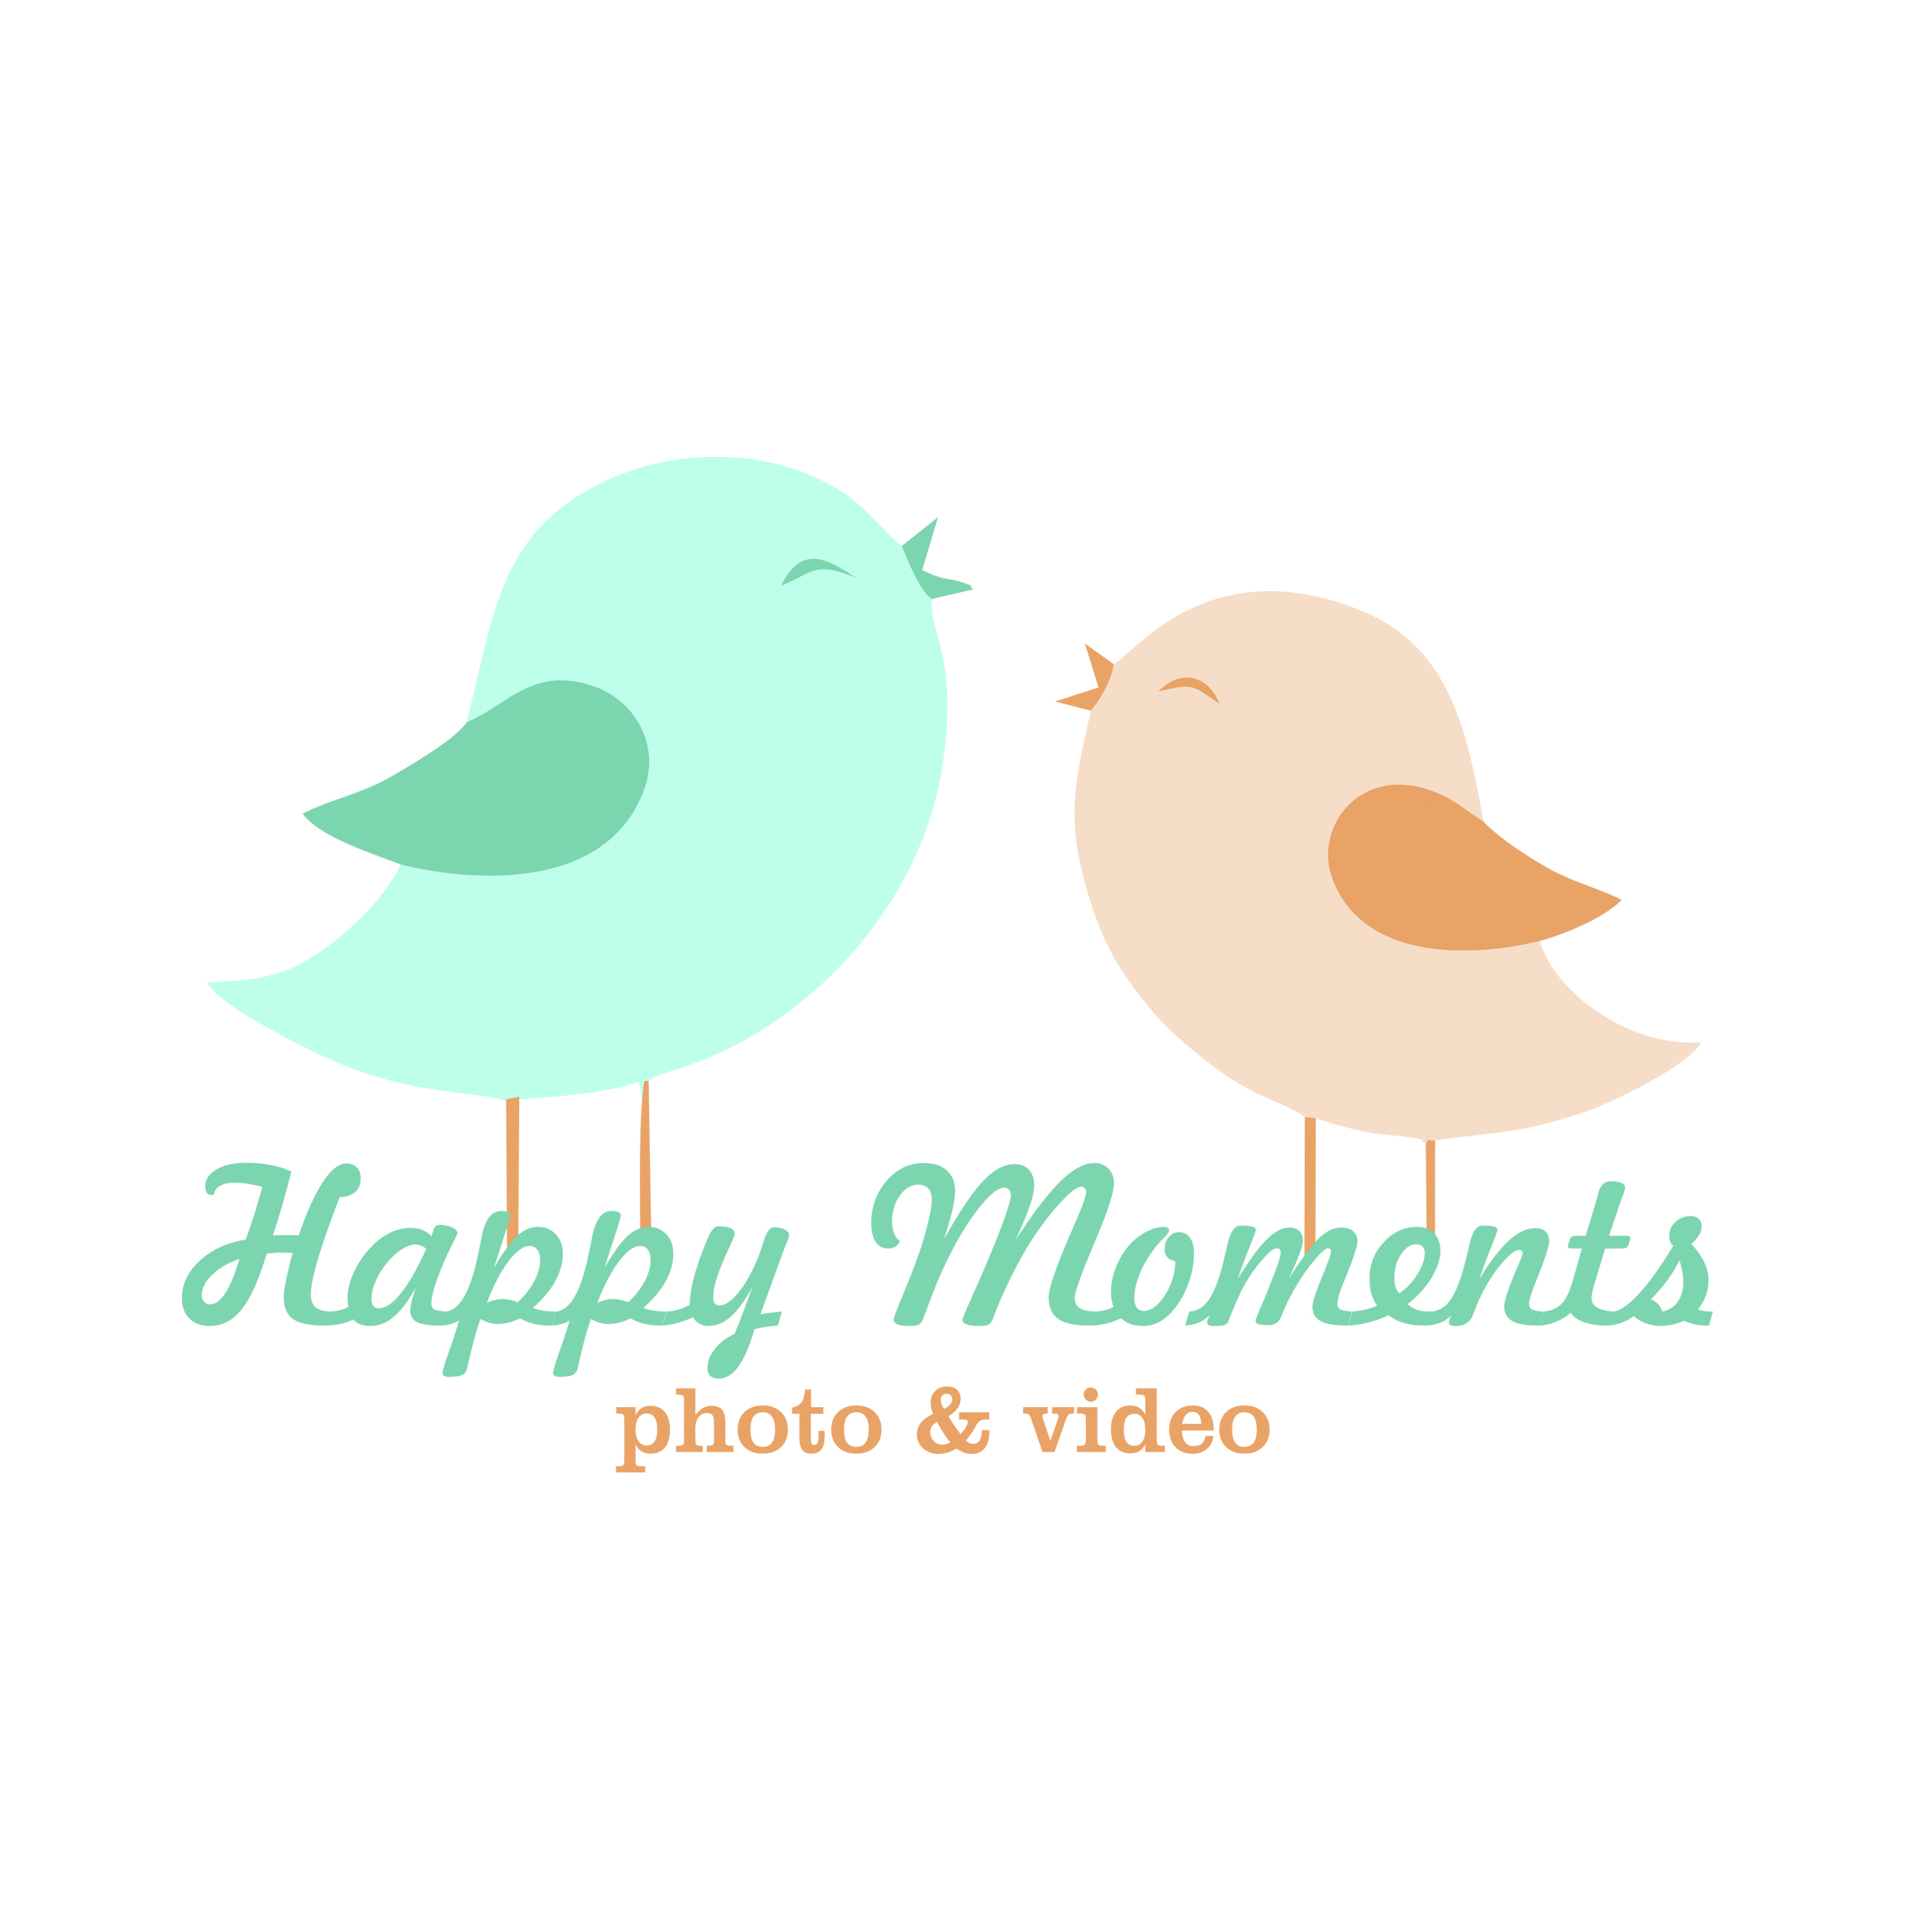 Студия фото и видеографии "Happy Moments"